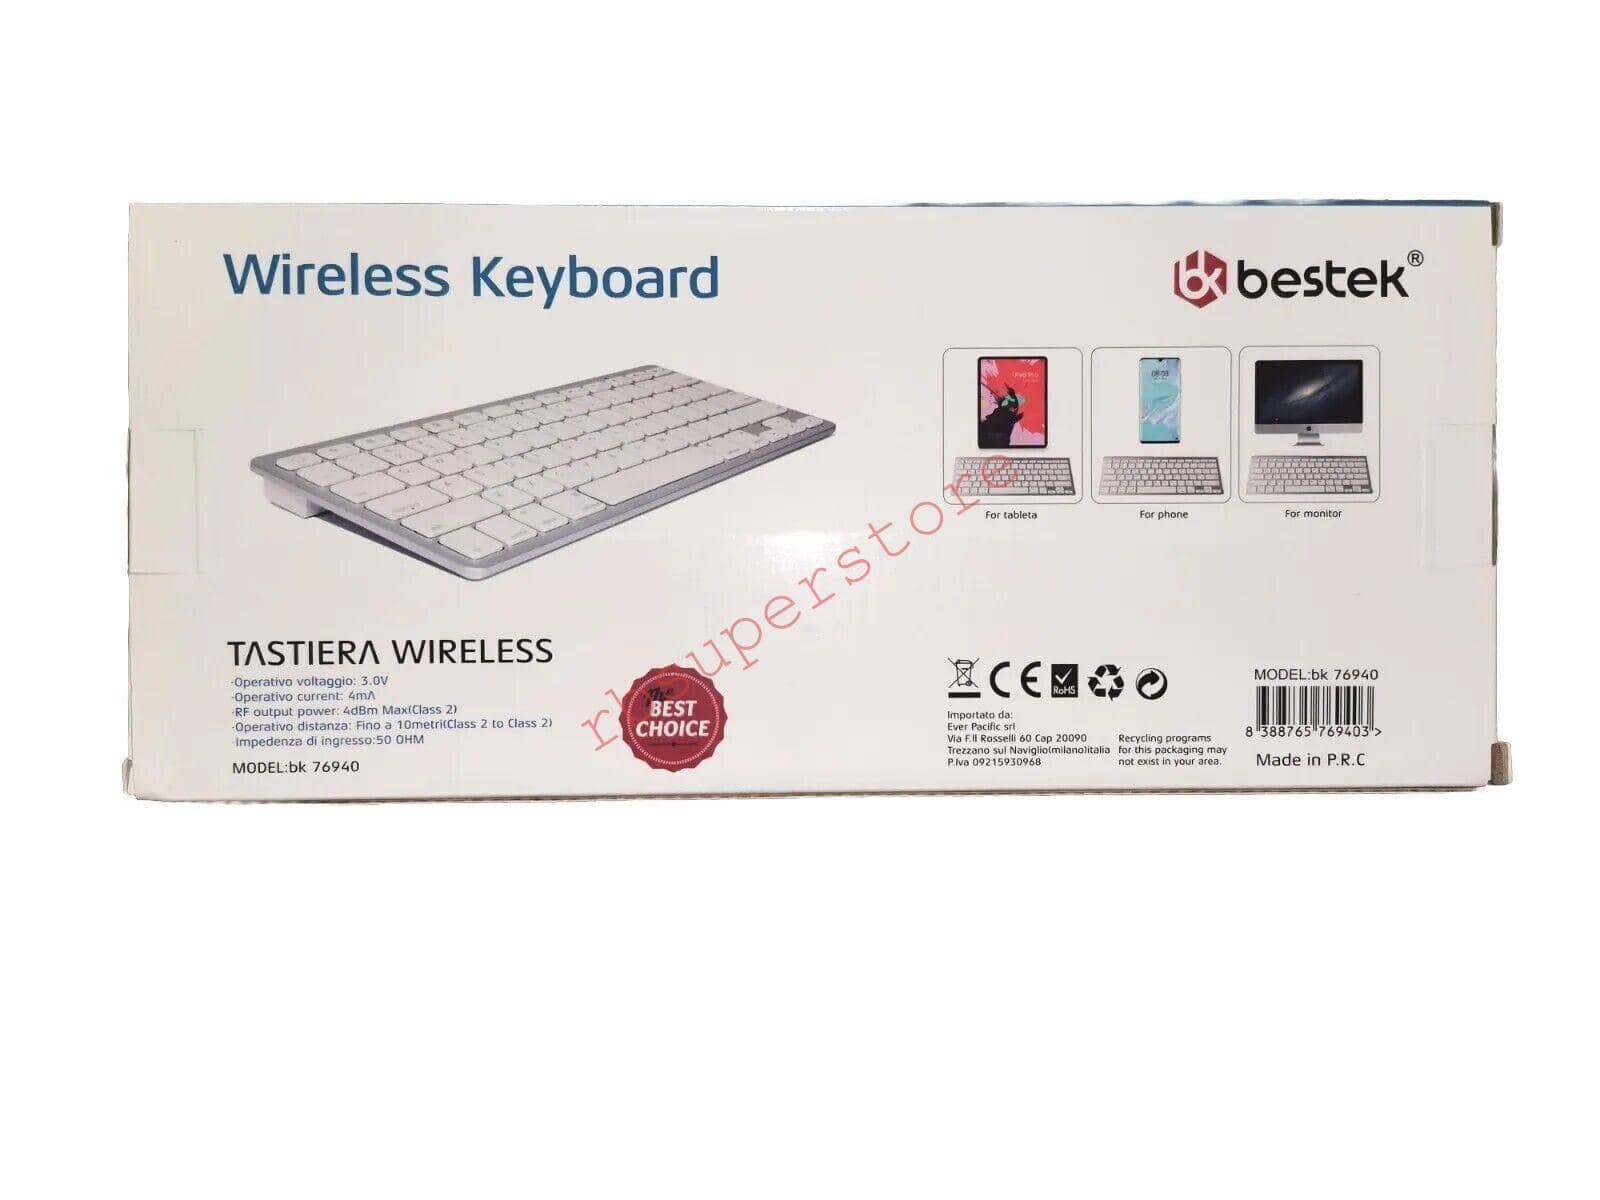 TASTIERA WIRELESS KEYBOARD PORTATILE LEGGERA PER PC TABLET SMARTPHONE -  R.B. Super Store